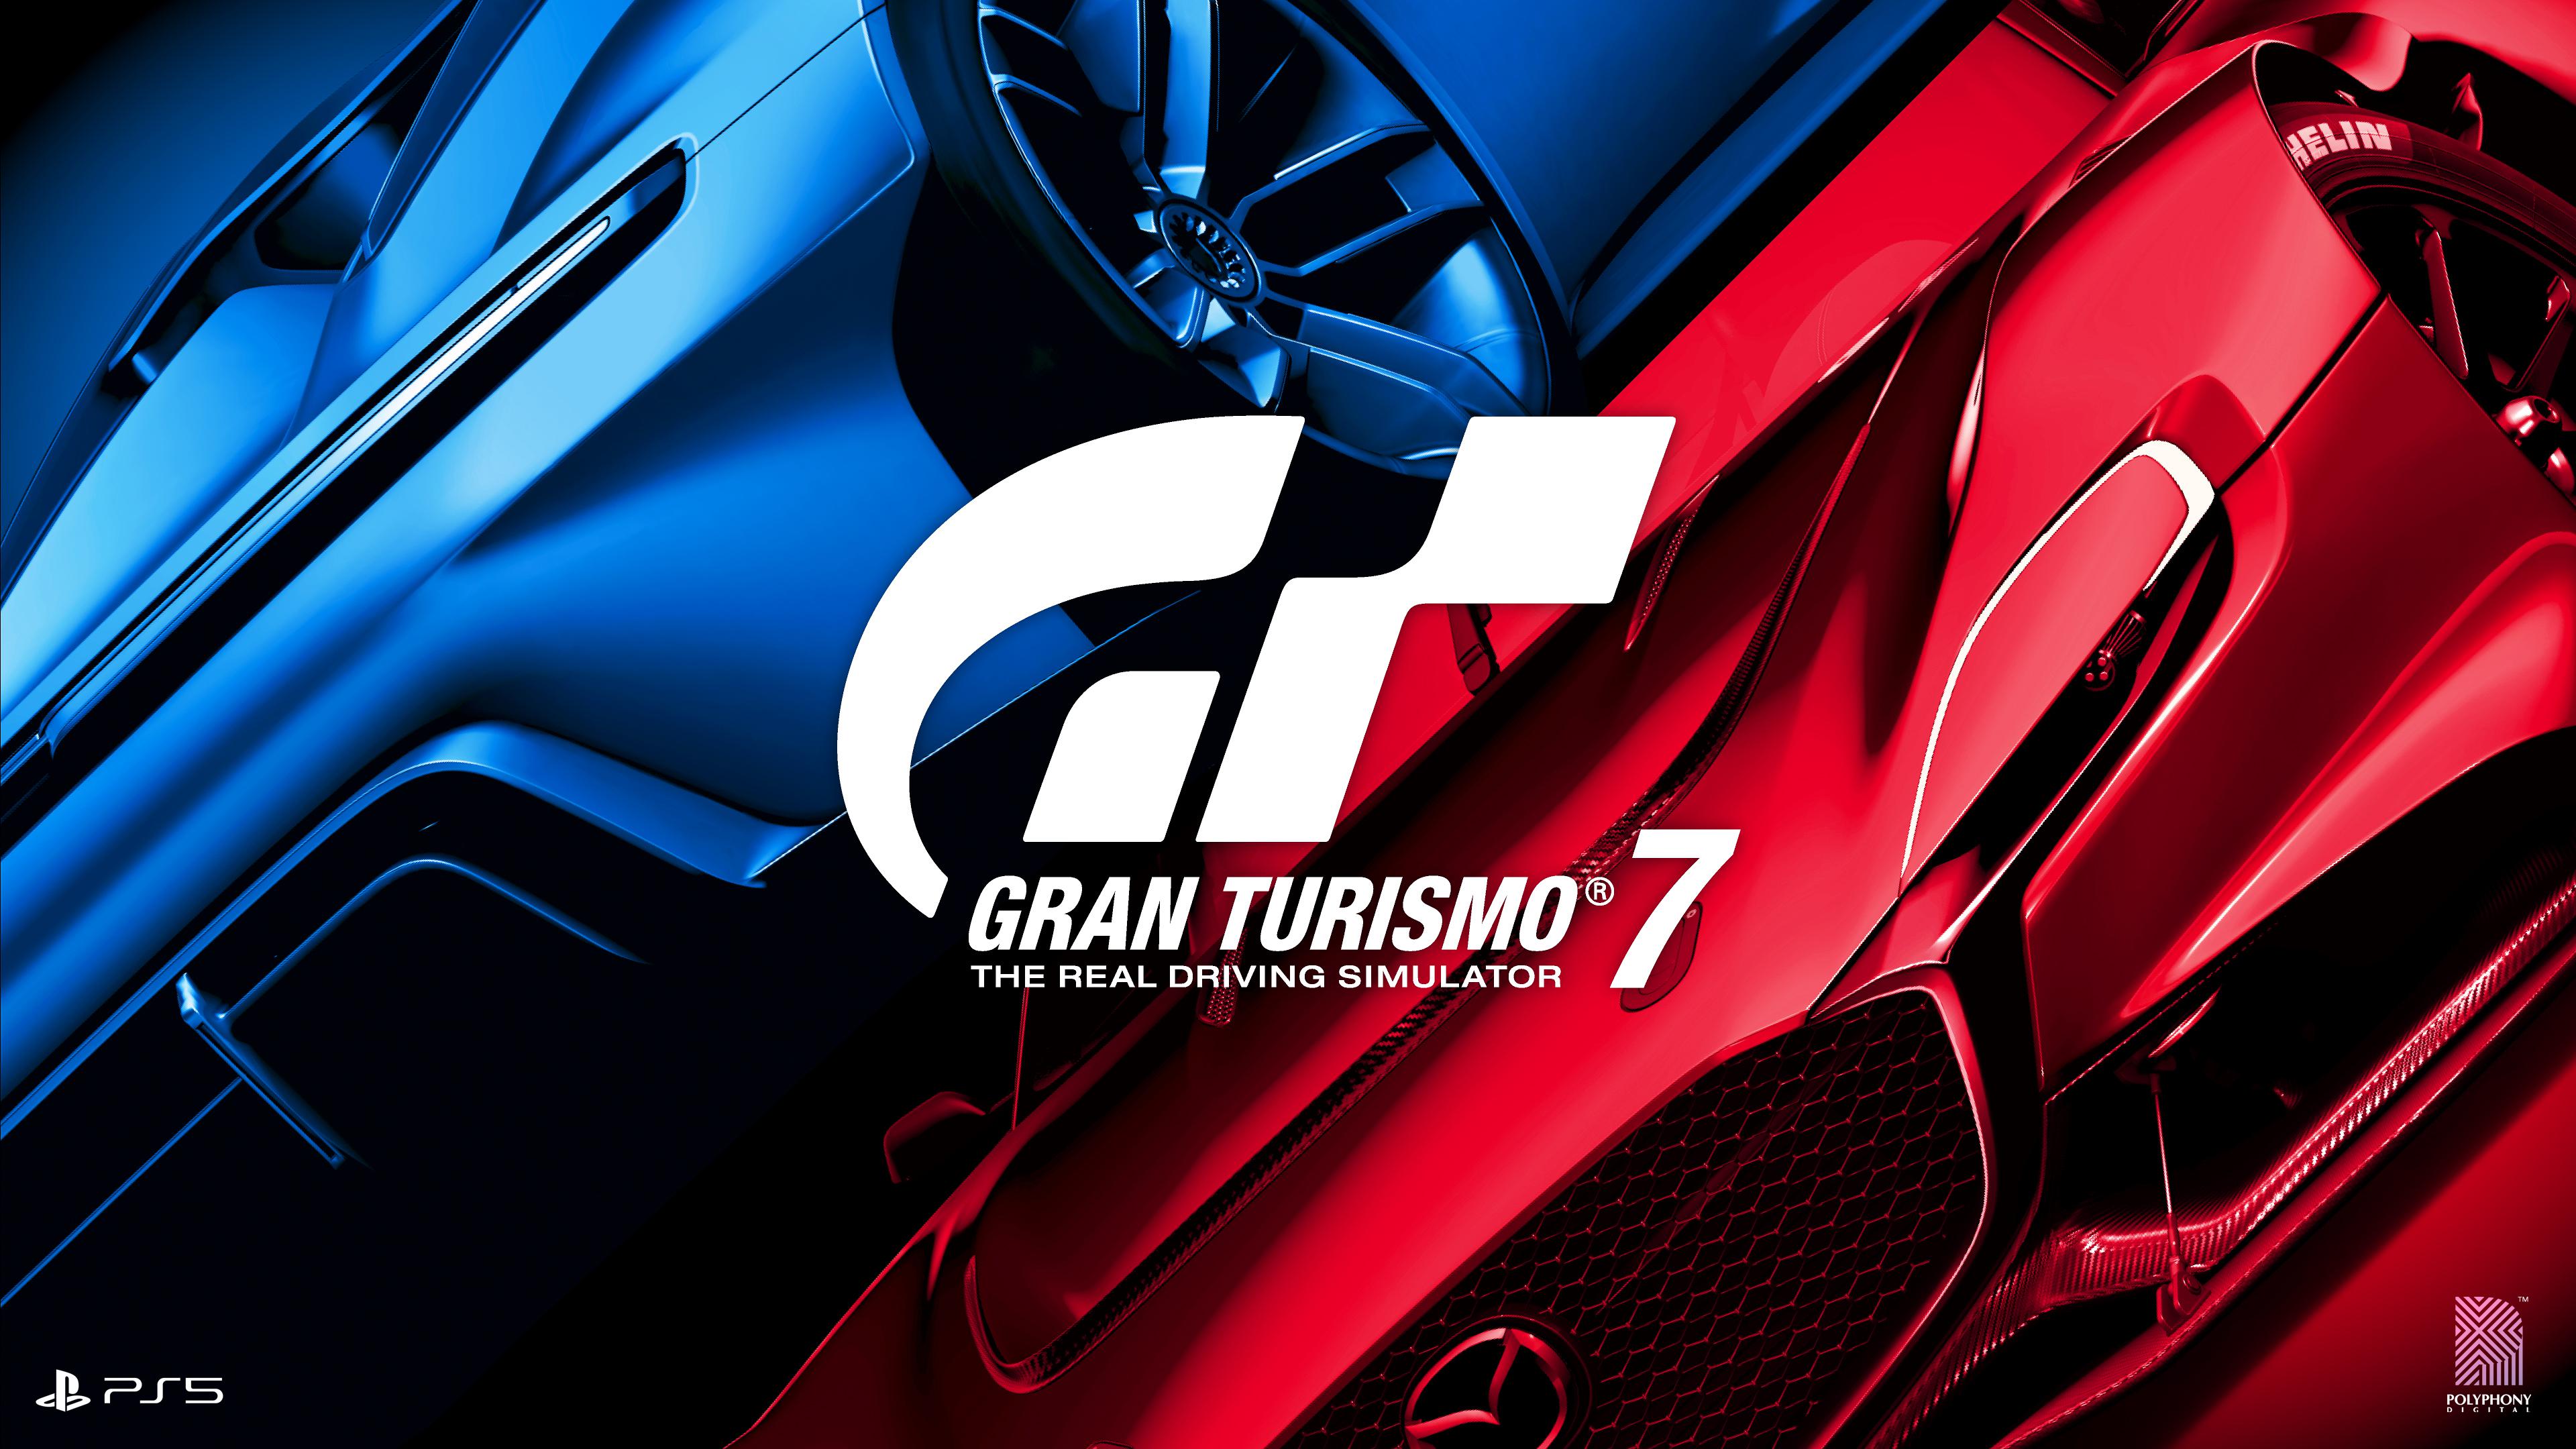 Gran Turismo Ps4 Video Game HD Wallpaper Px